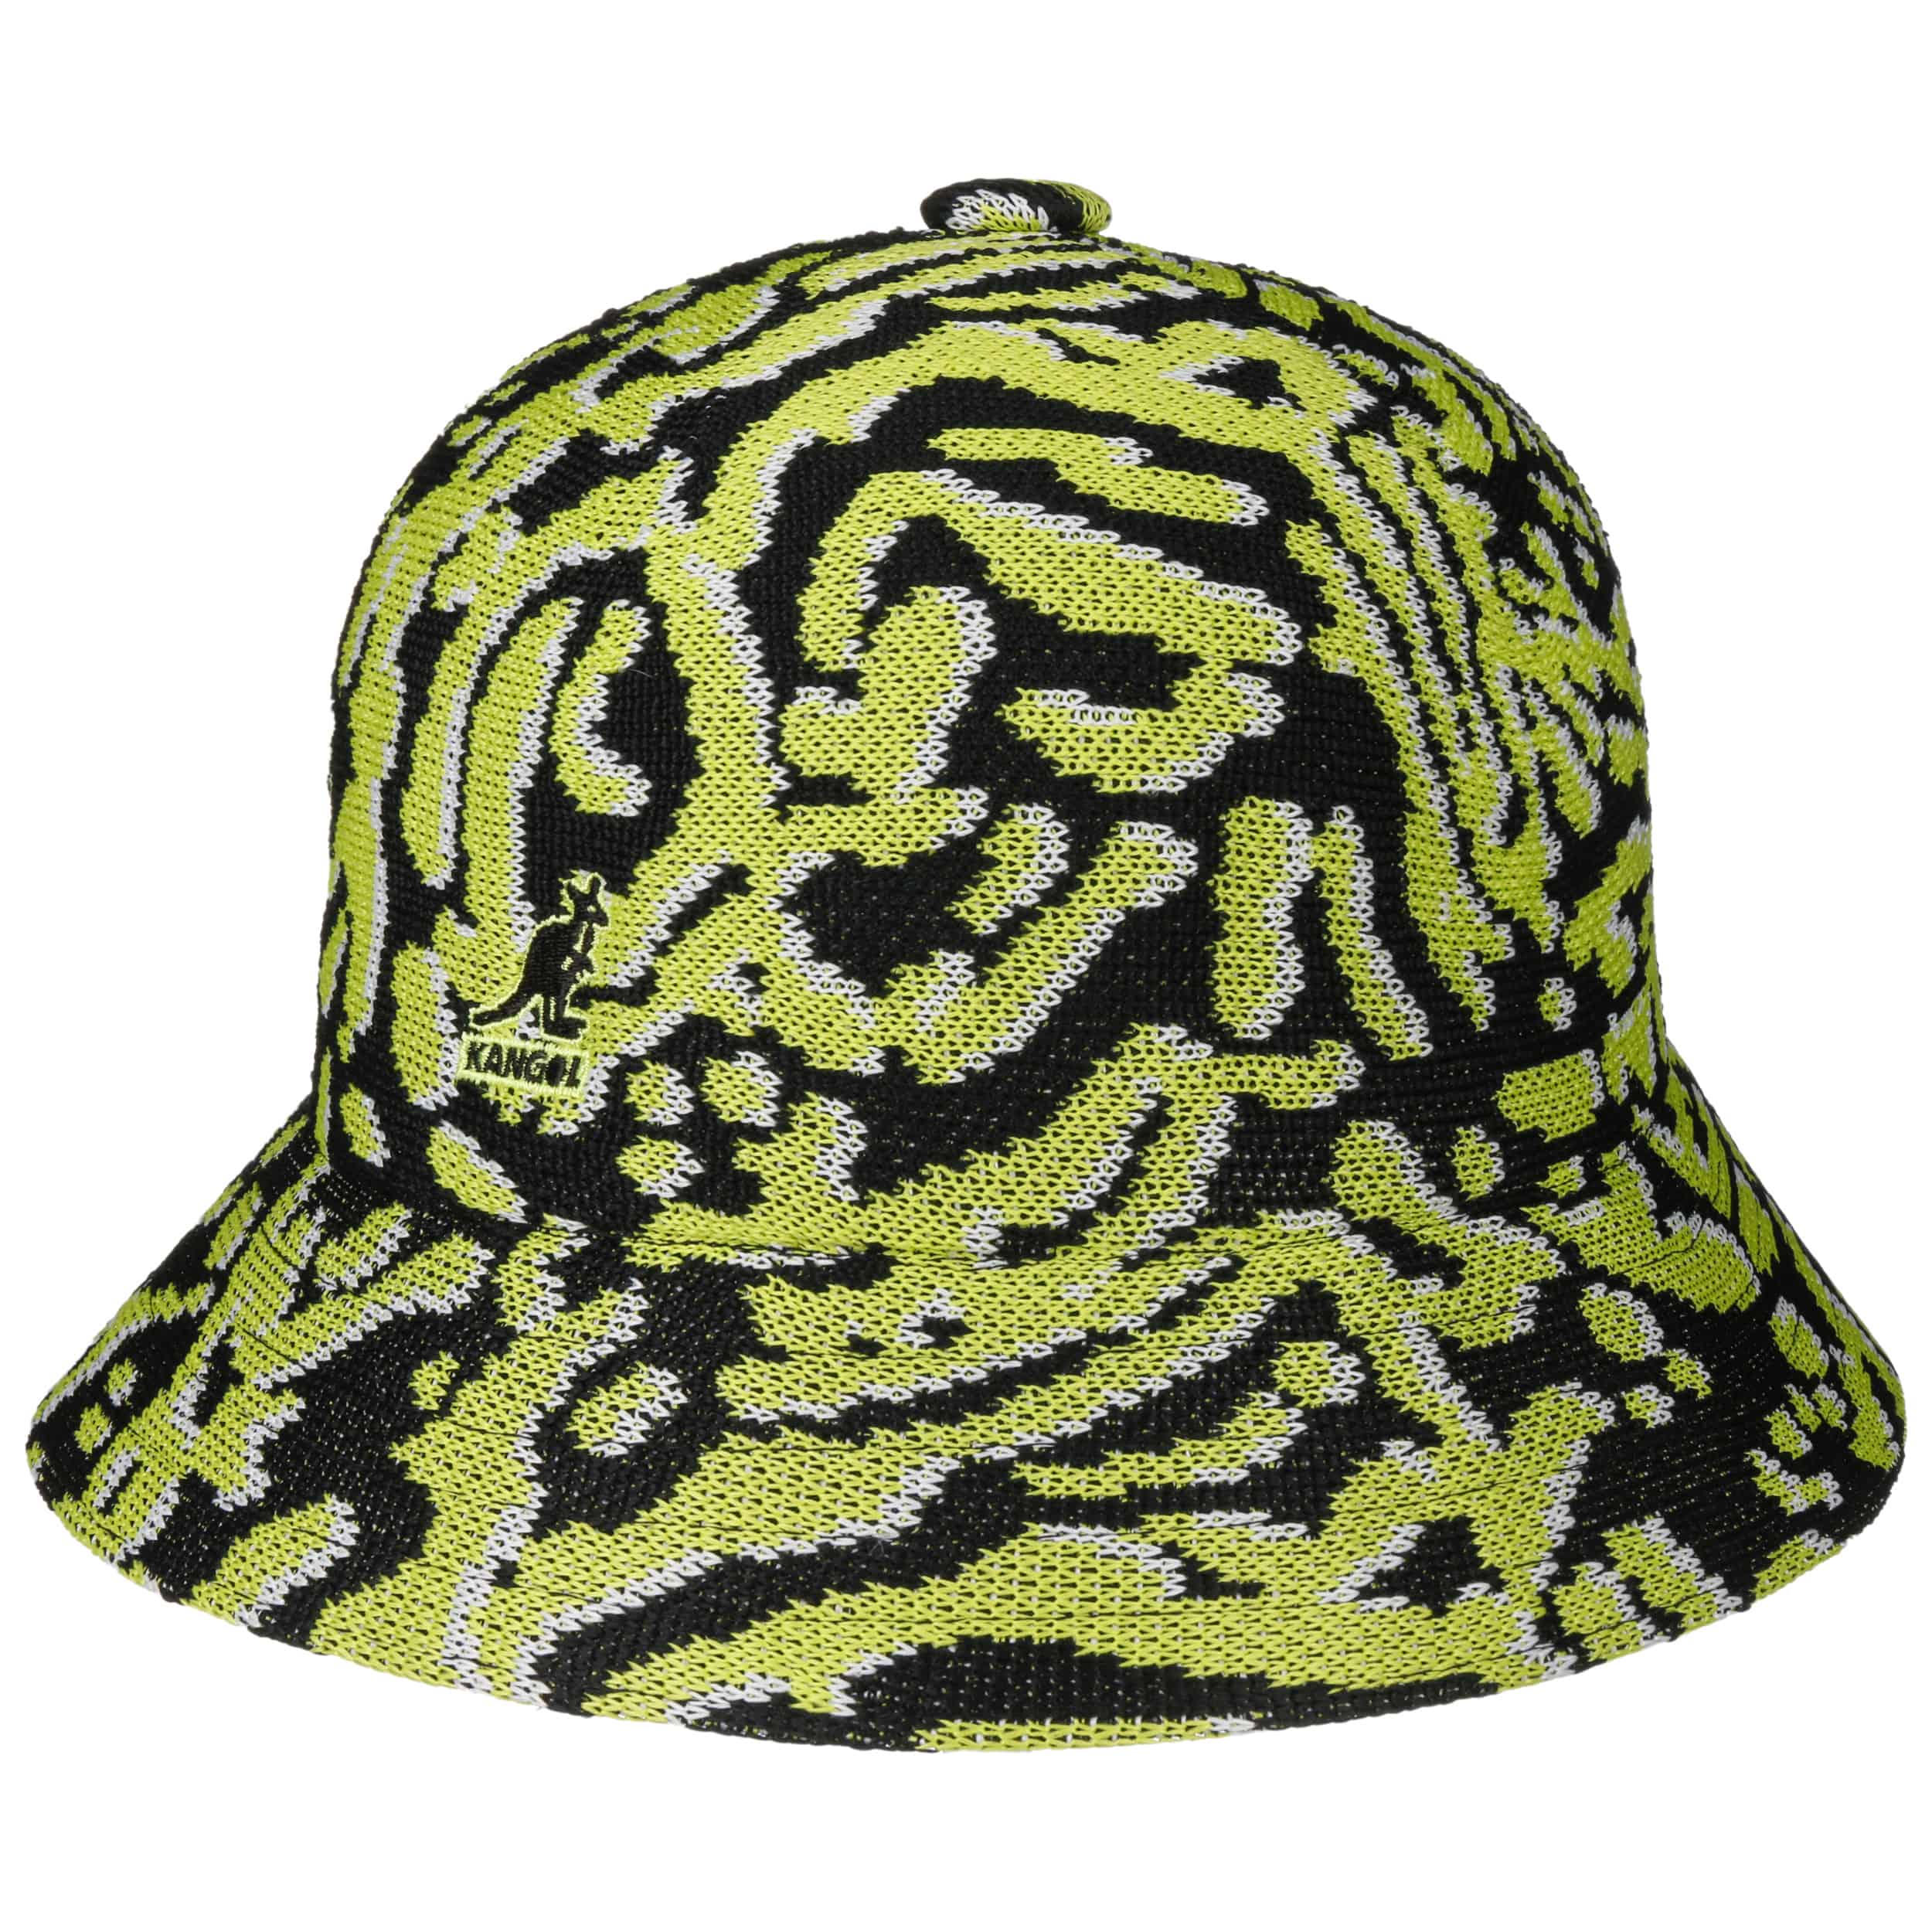 Carnival Casual Dart Frog Cloth Hat by Kangol - 79,95 €